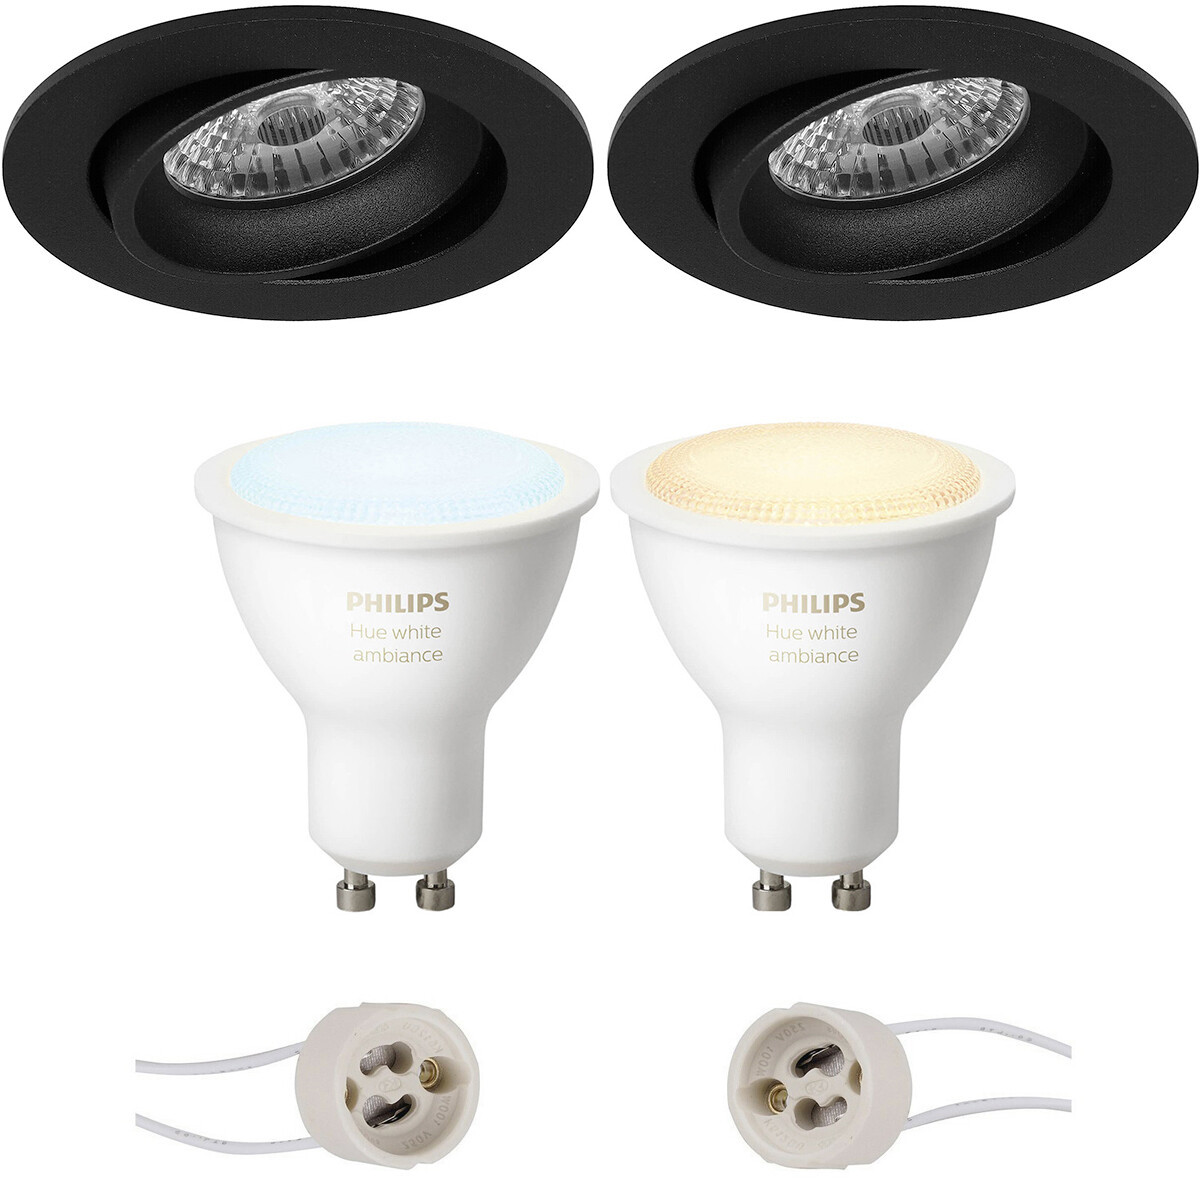 Pragmi Delton Pro - Inbouw Rond - Mat Zwart - Kantelbaar - Ø82mm - Philips Hue - LED Spot Set GU10 - White Ambiance - Bluetooth